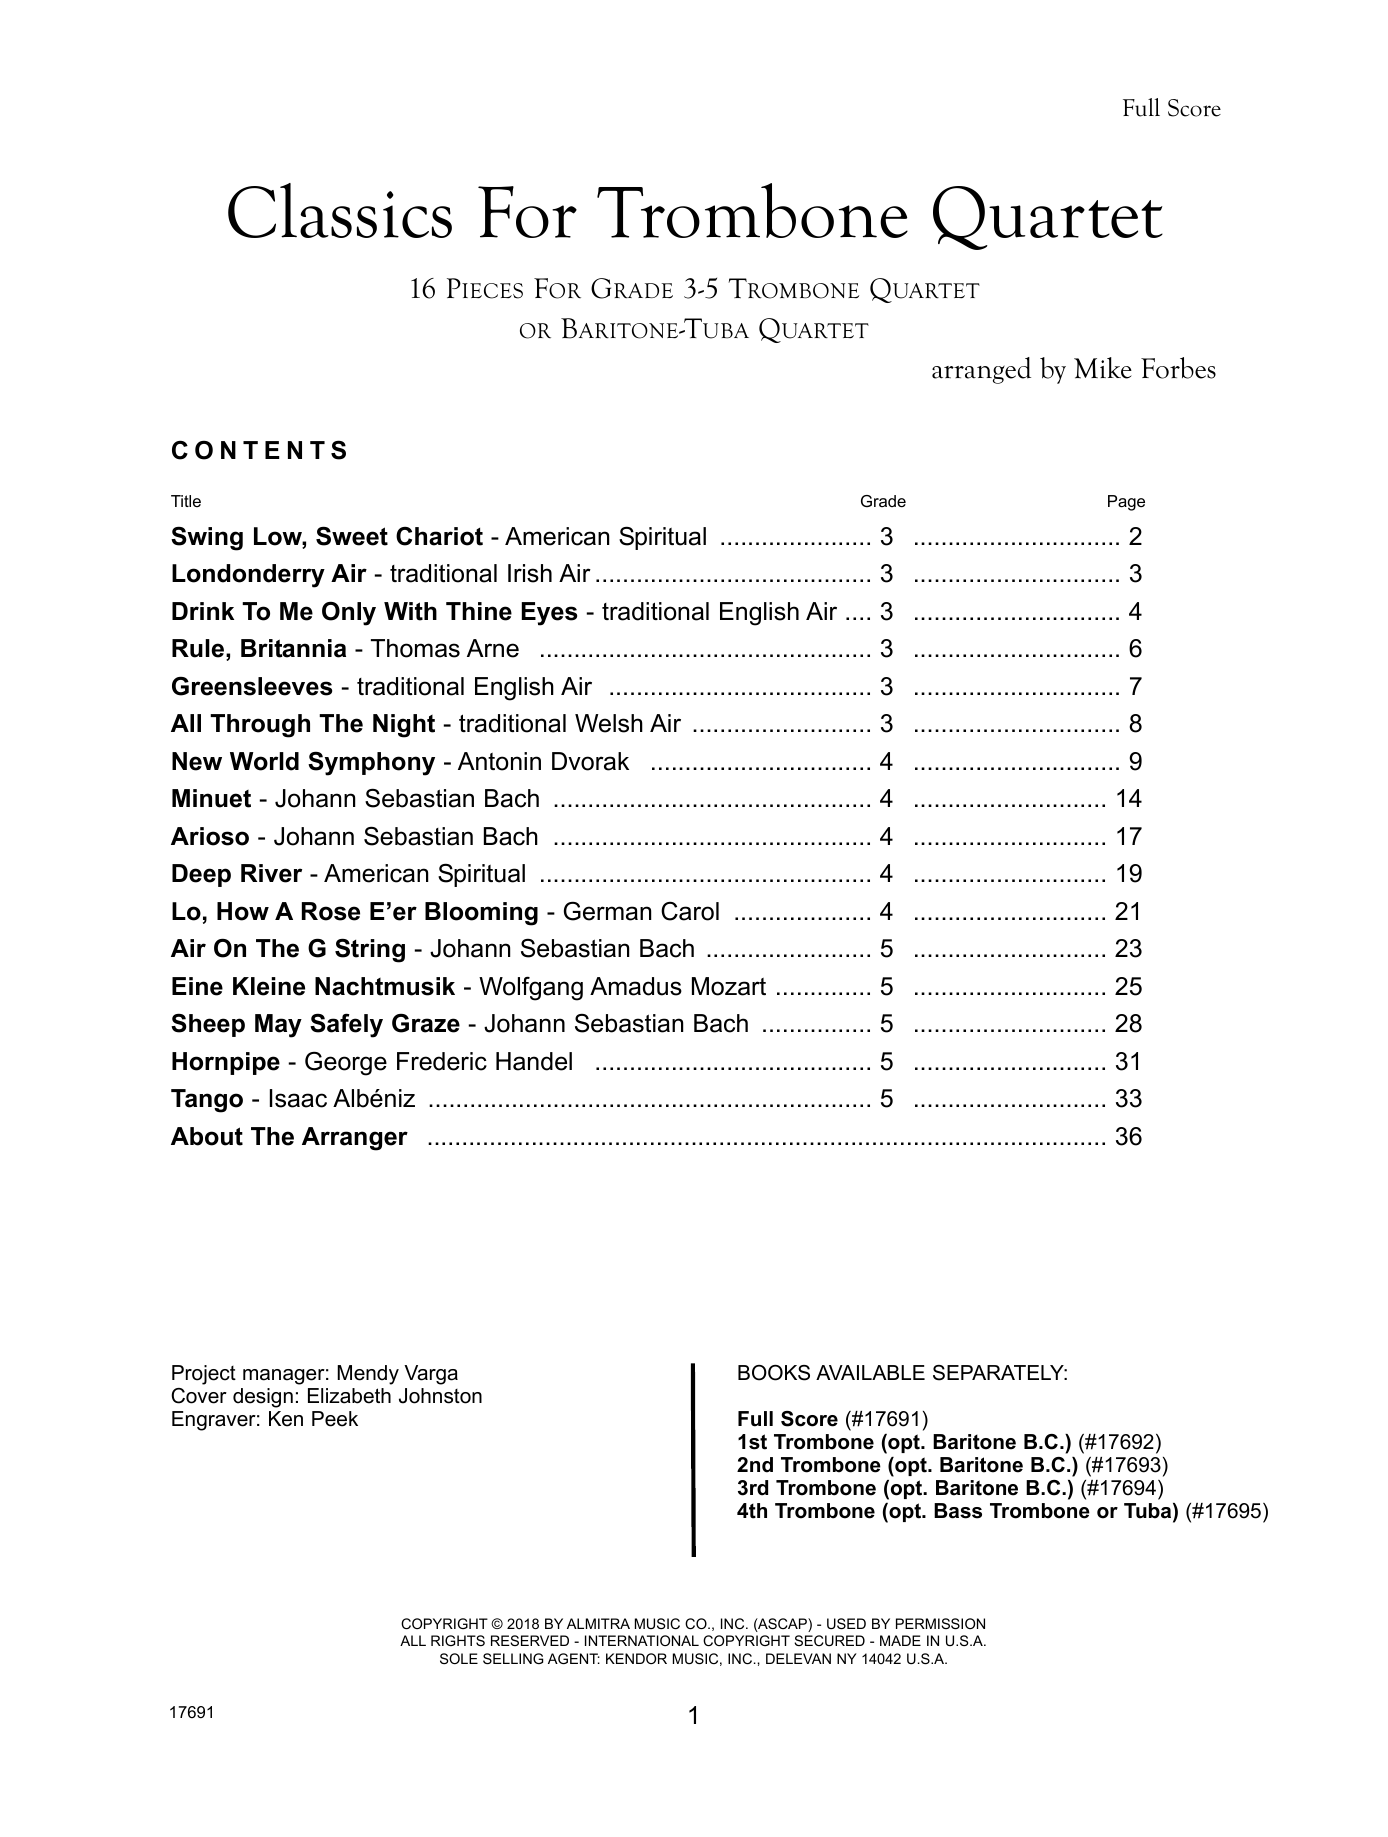 Download Mike Forbes Classics For Trombone Quartet - Full Sc Sheet Music